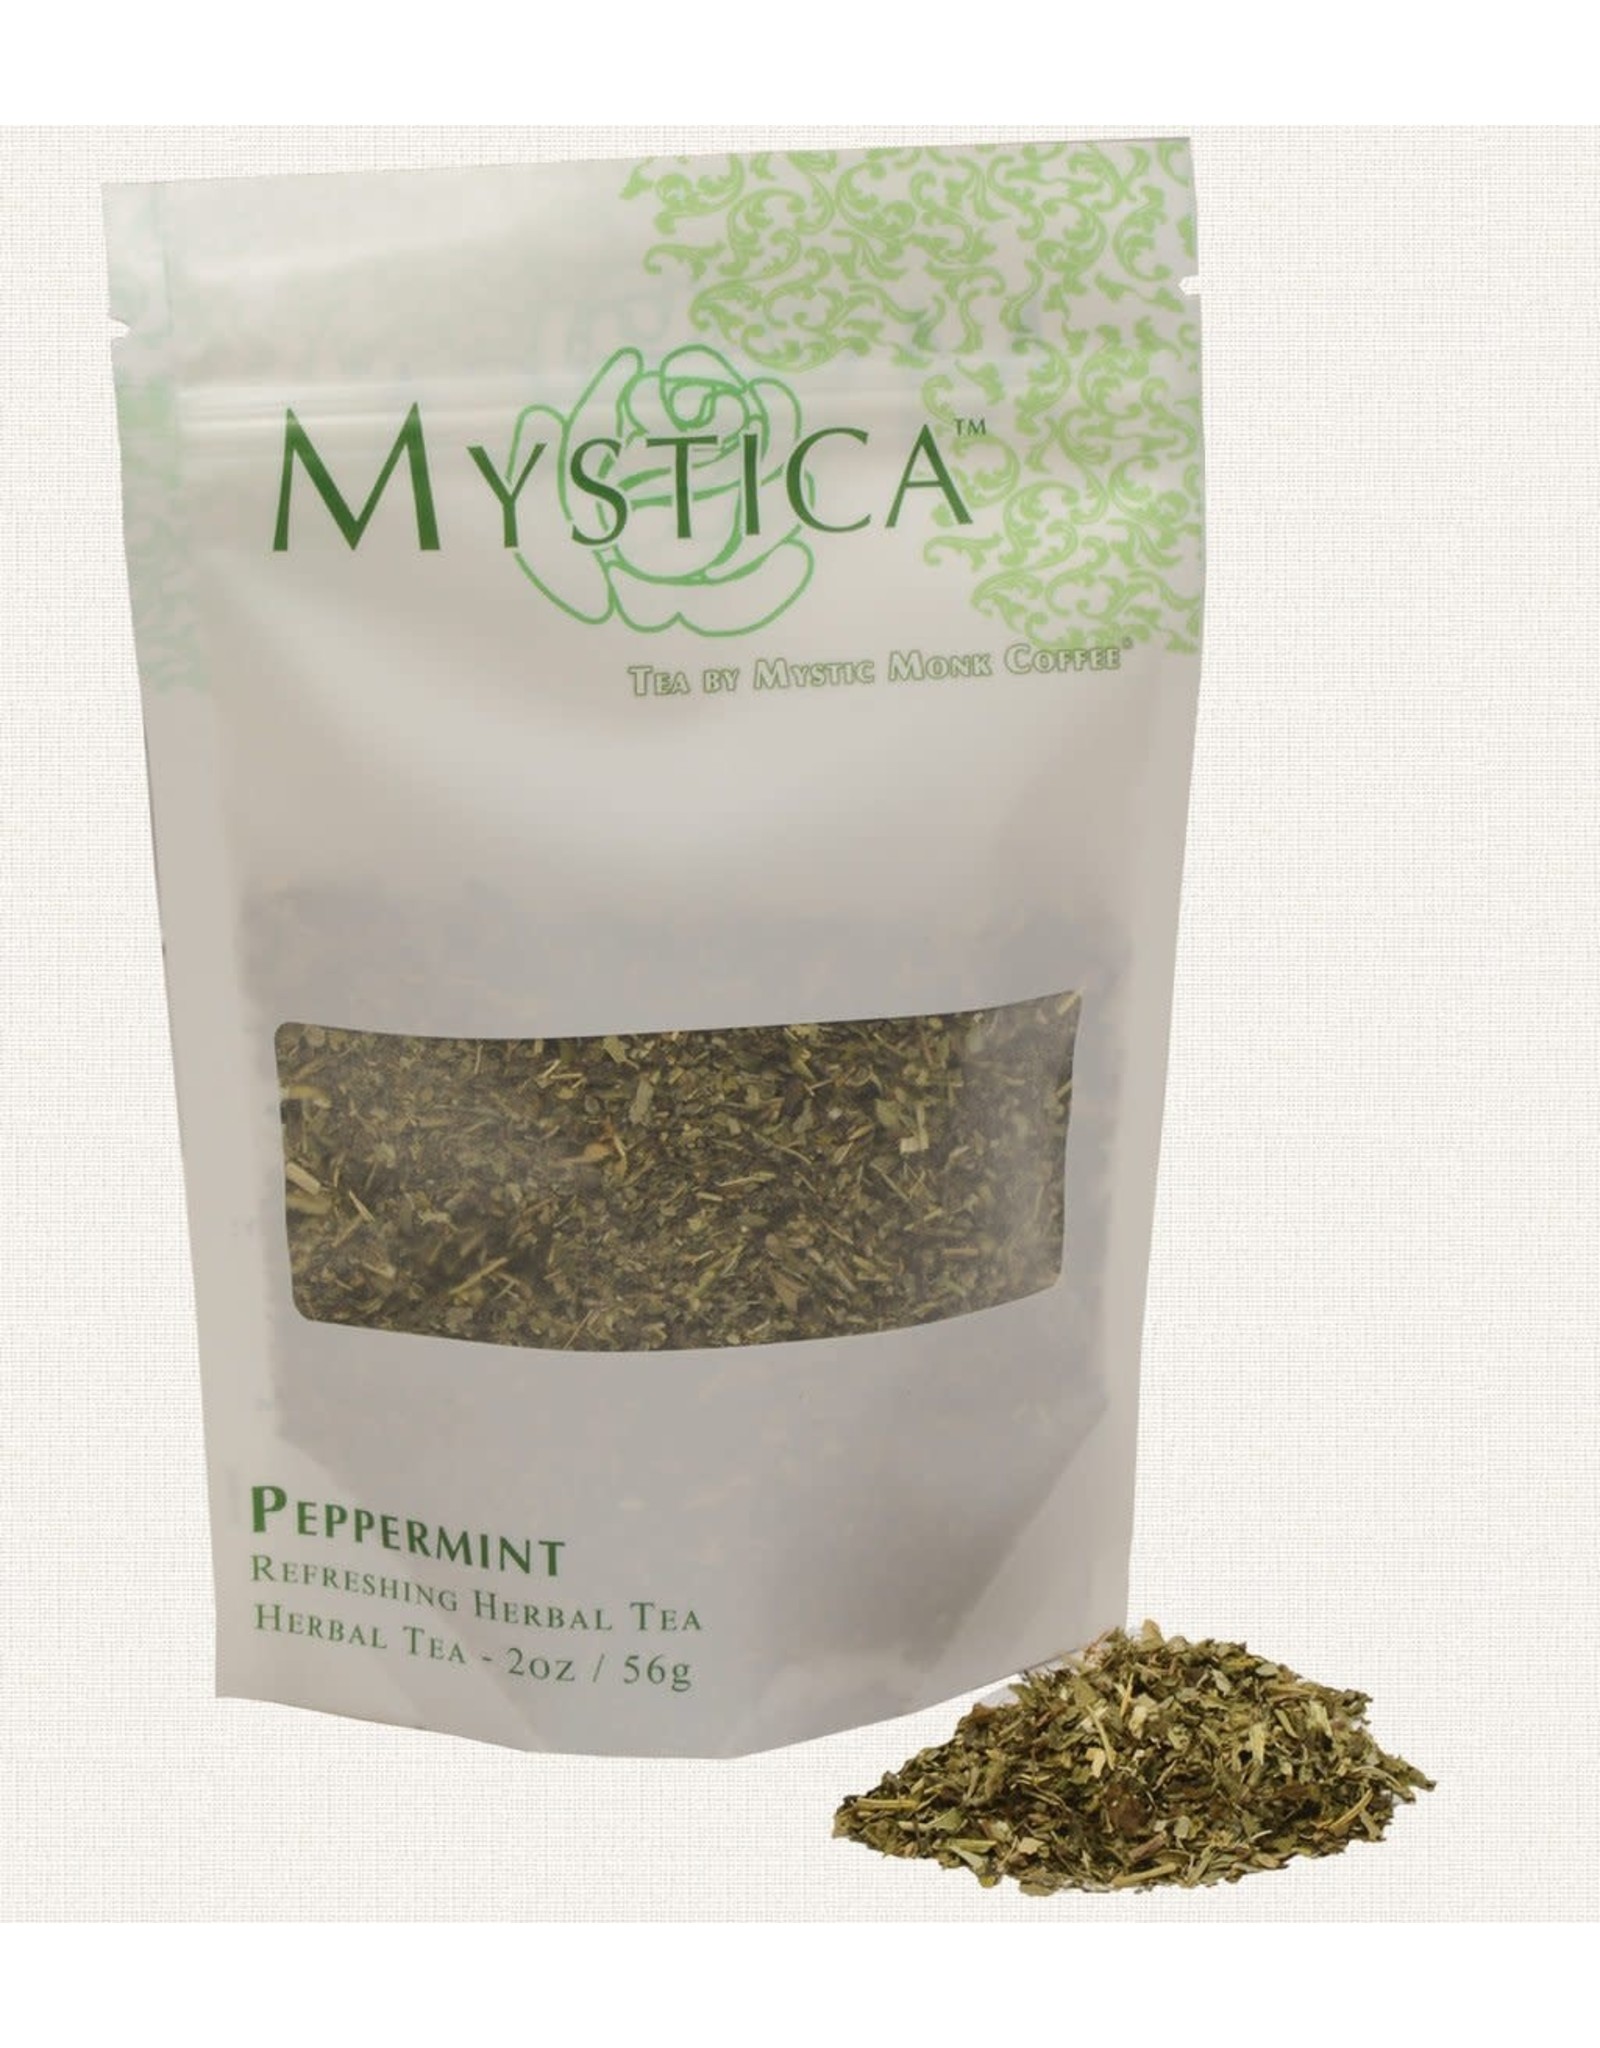 Mystic Monk Mystica Peppermint Herbal Loose Tea Blend